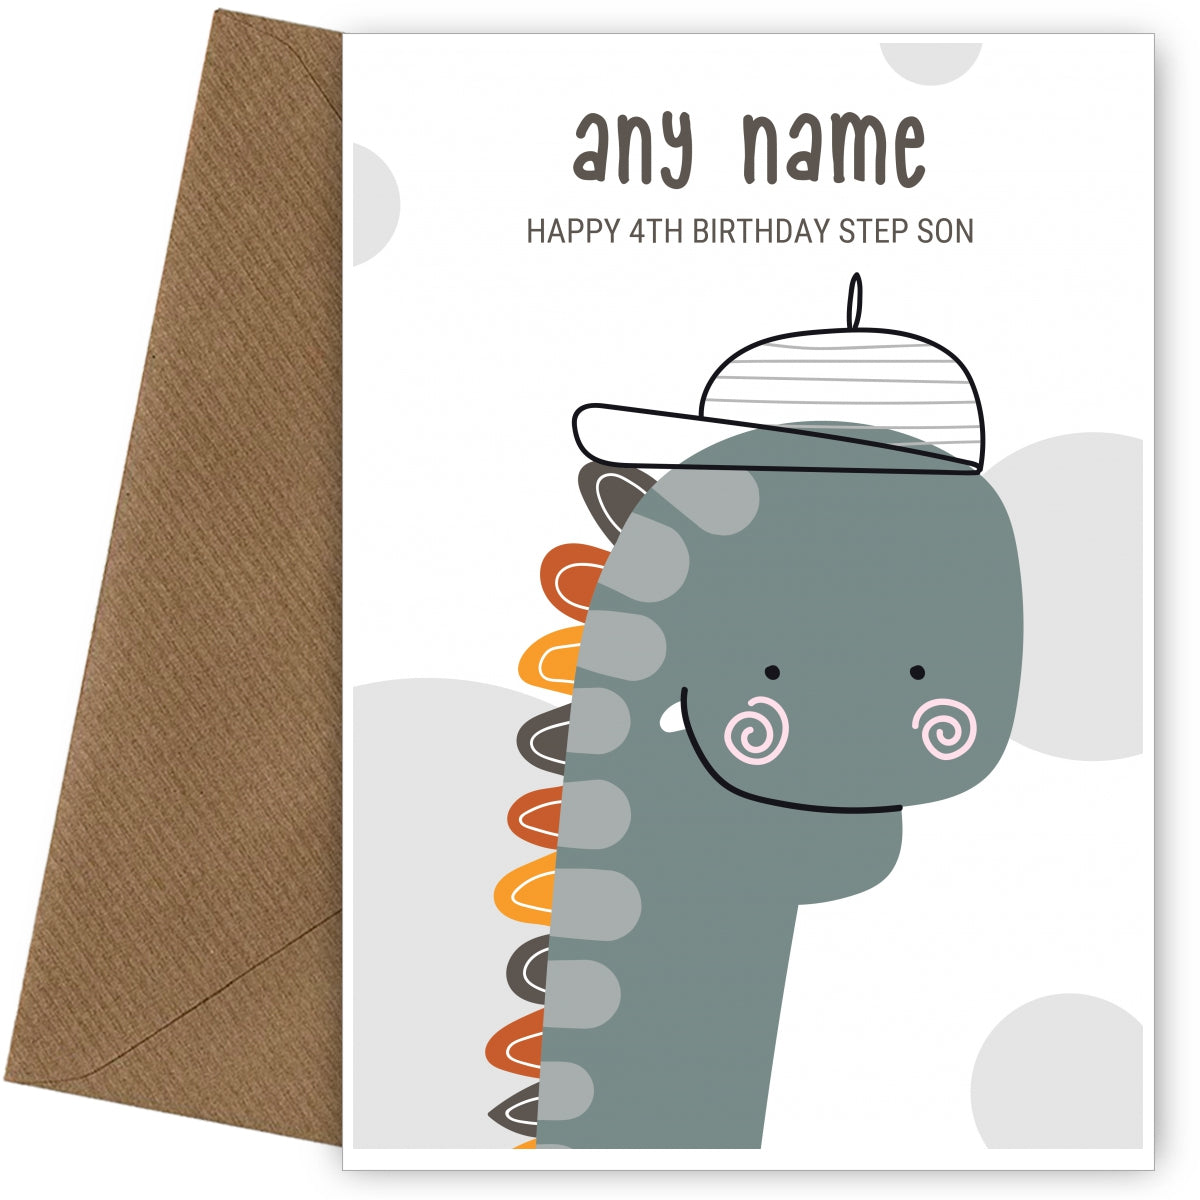 Happy 4th Birthday Card for Step Son - Dinosaur with Cap